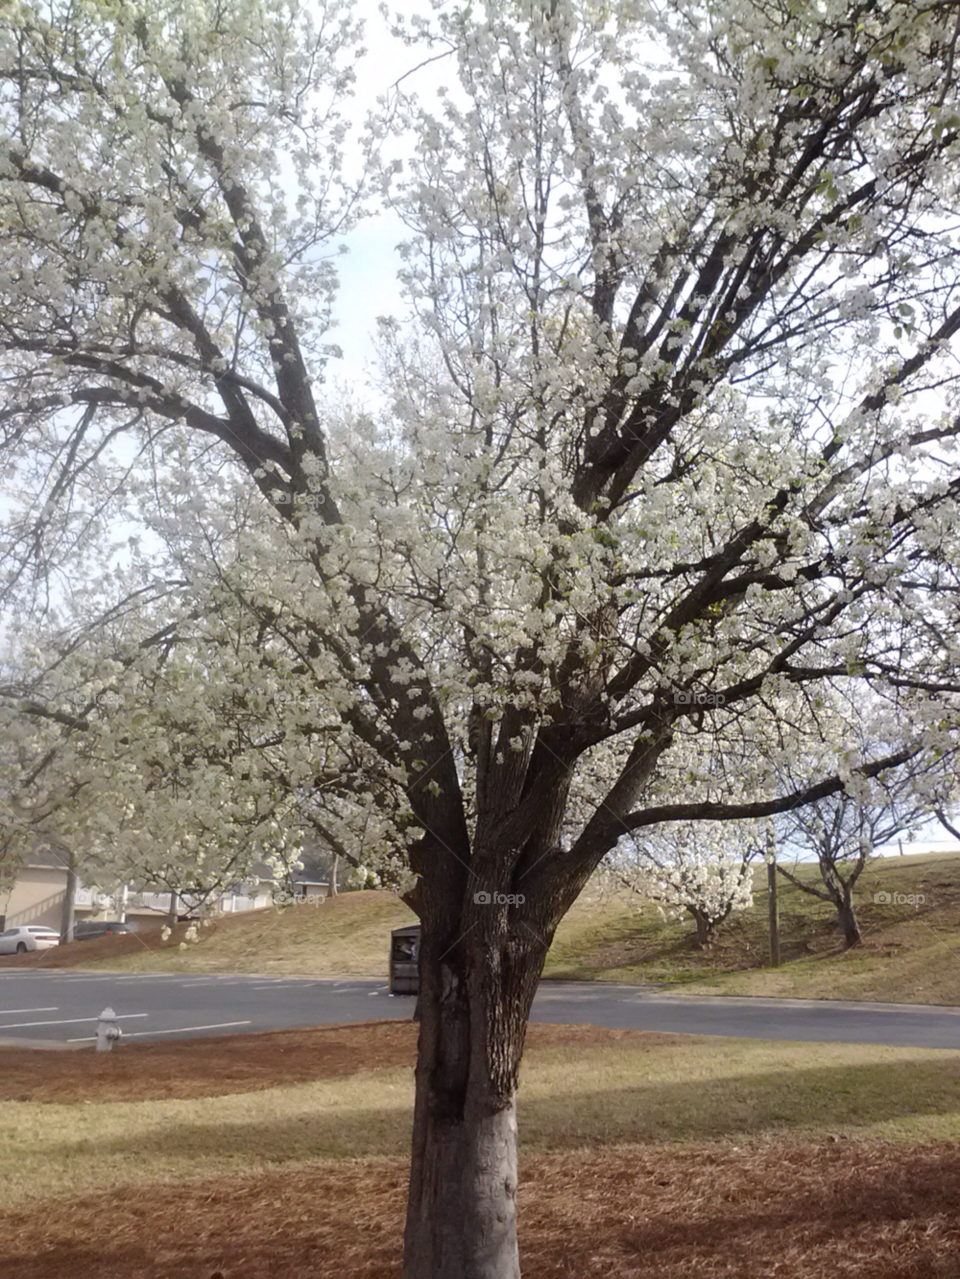 spring tree in bloom by briwnskin371